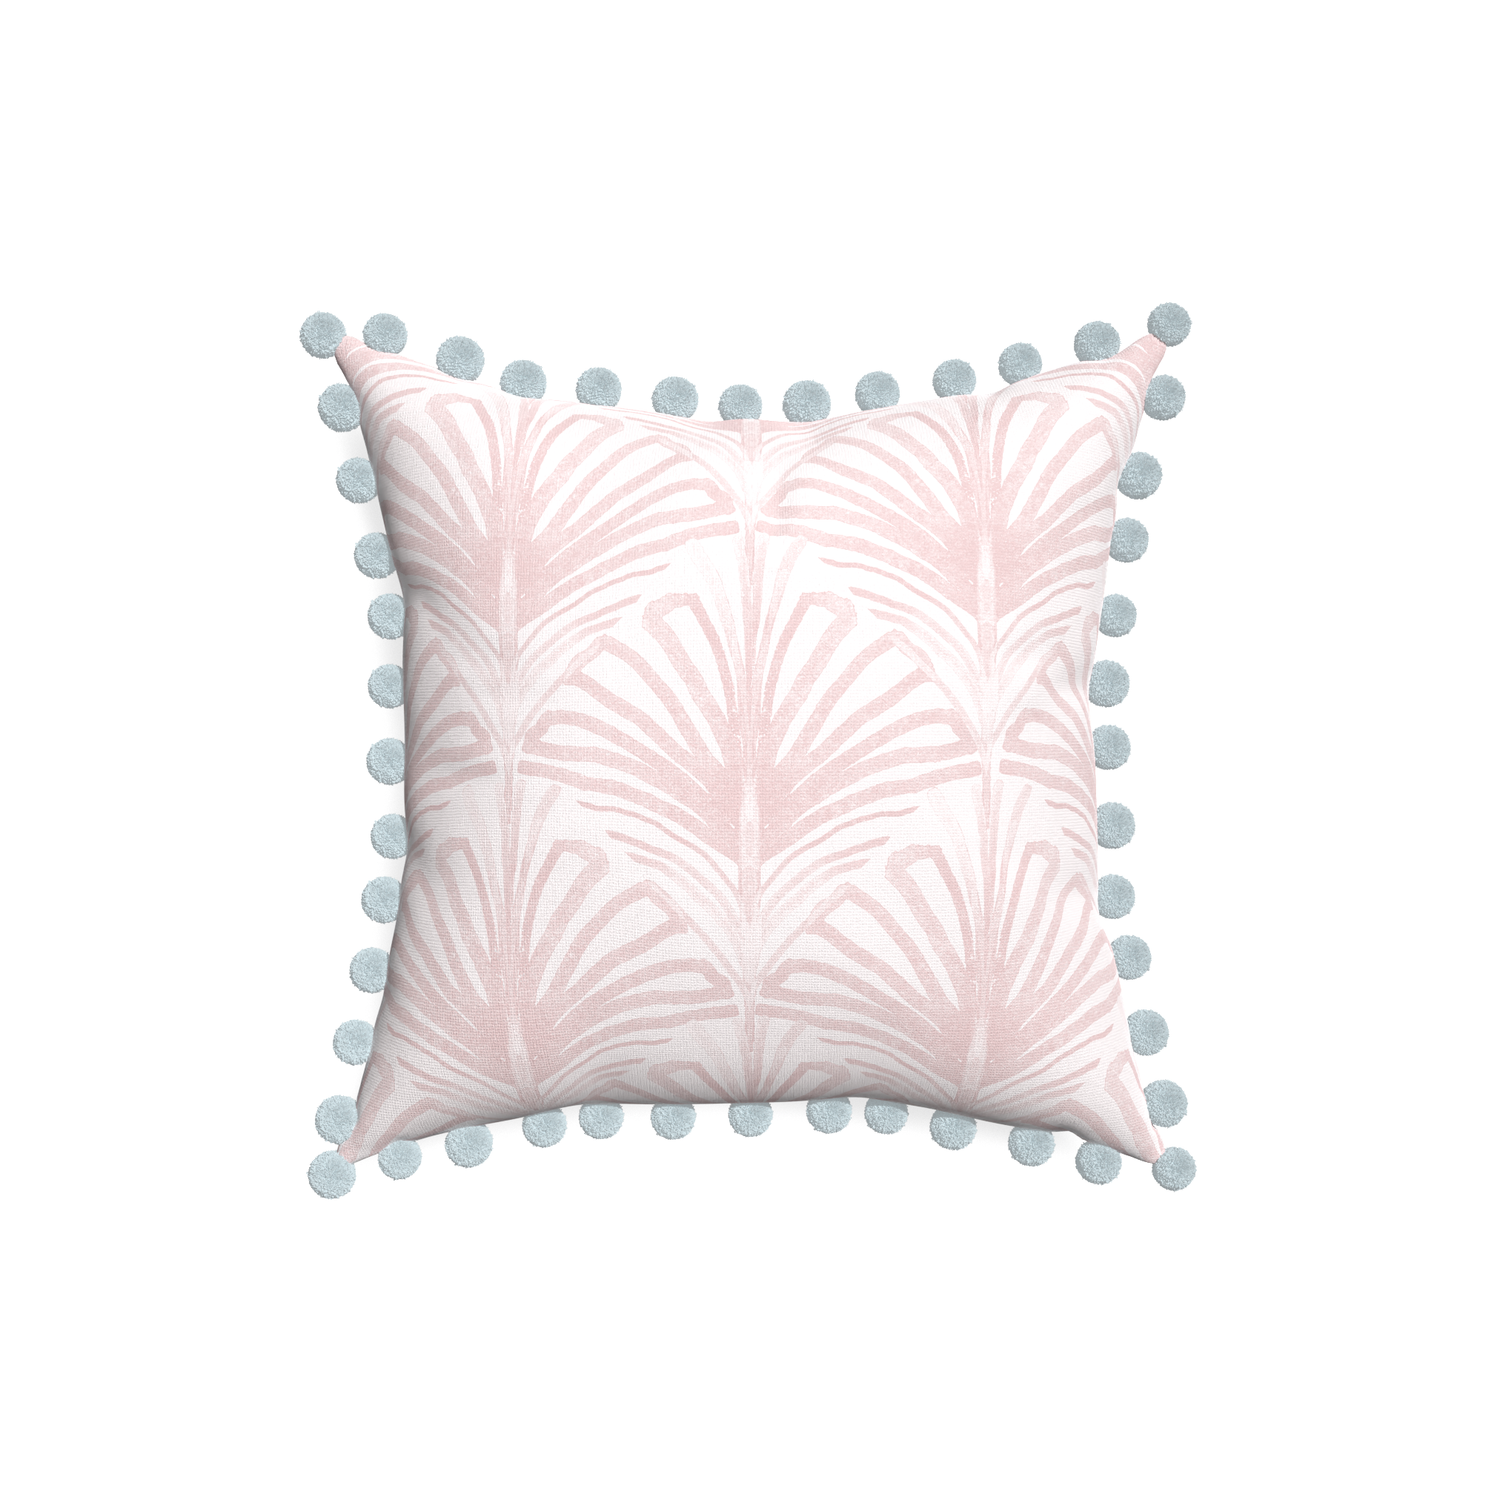 18-square suzy rose custom pillow with powder pom pom on white background